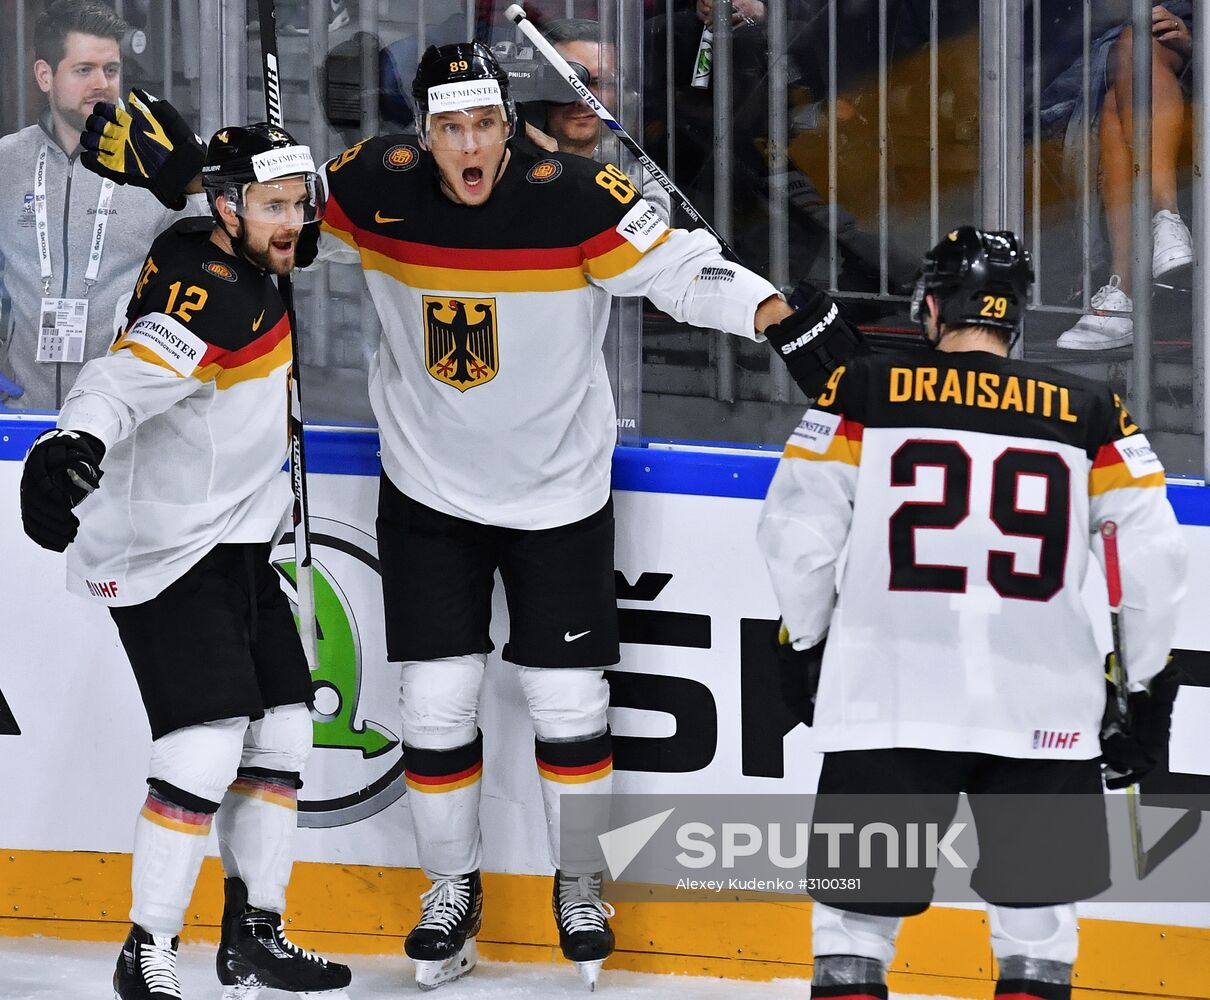 2017 IIHF World Championship. Germany vs. Latvia